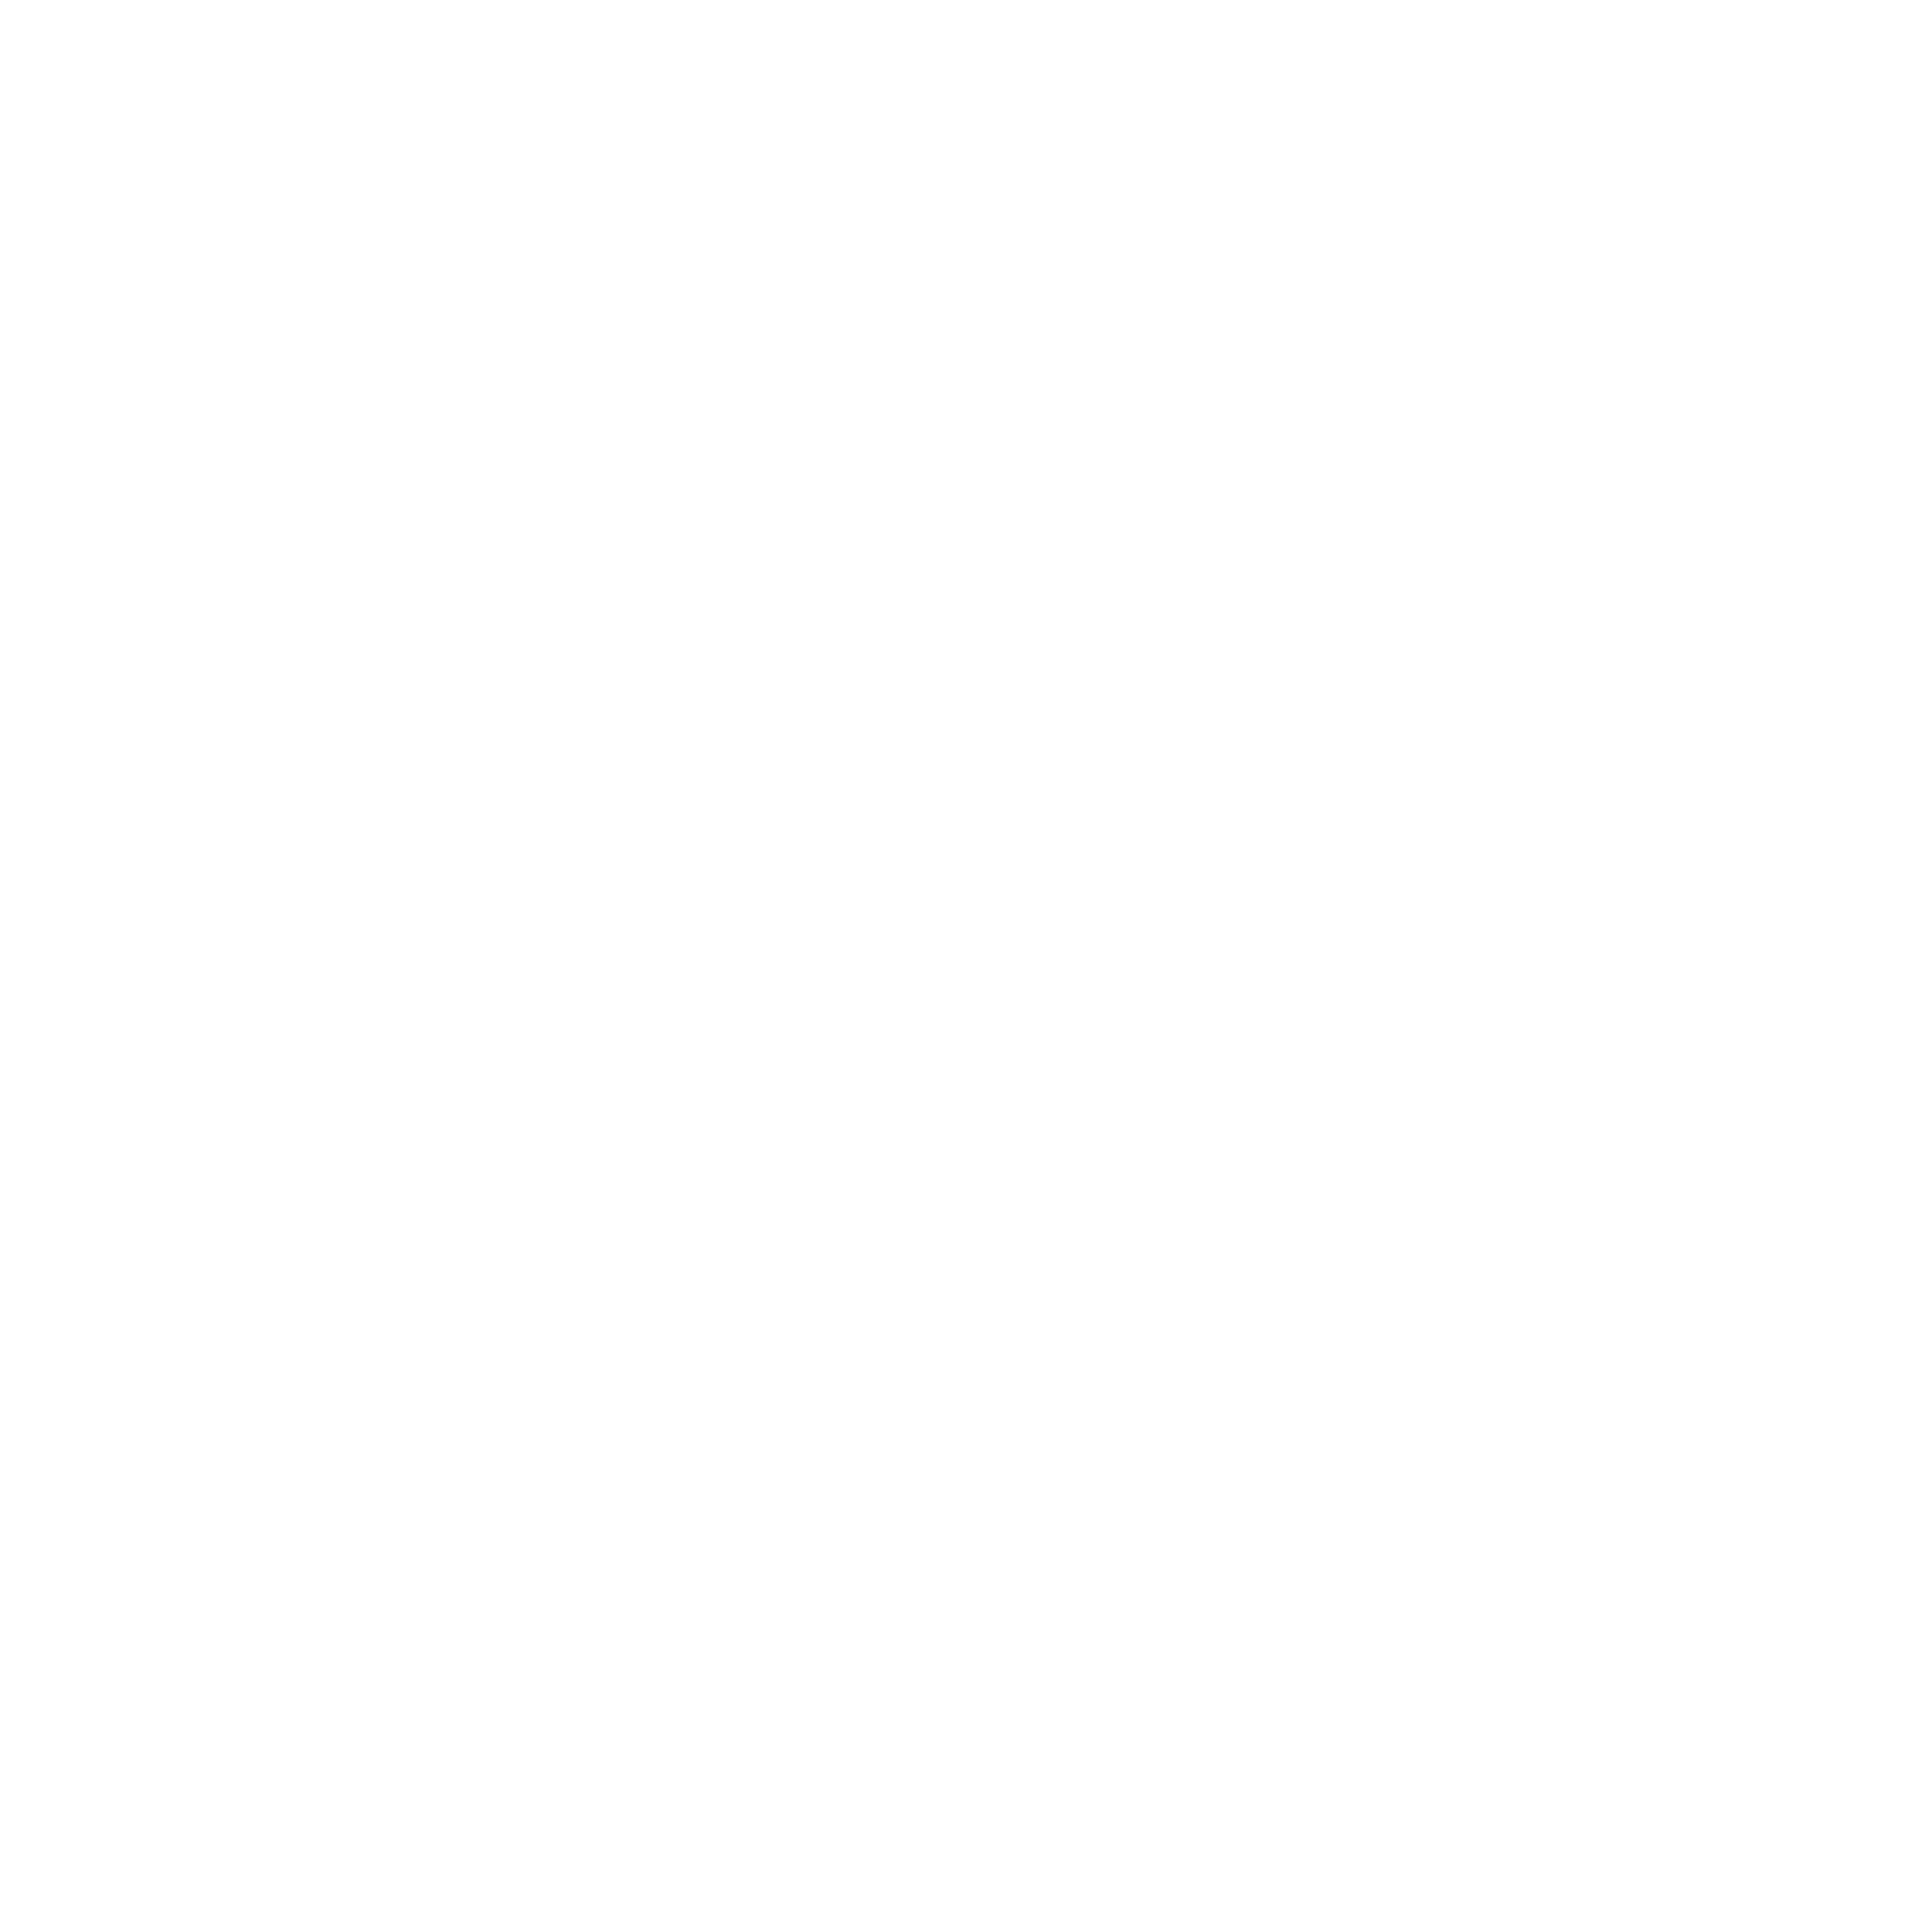 The Woodpecker Lodge